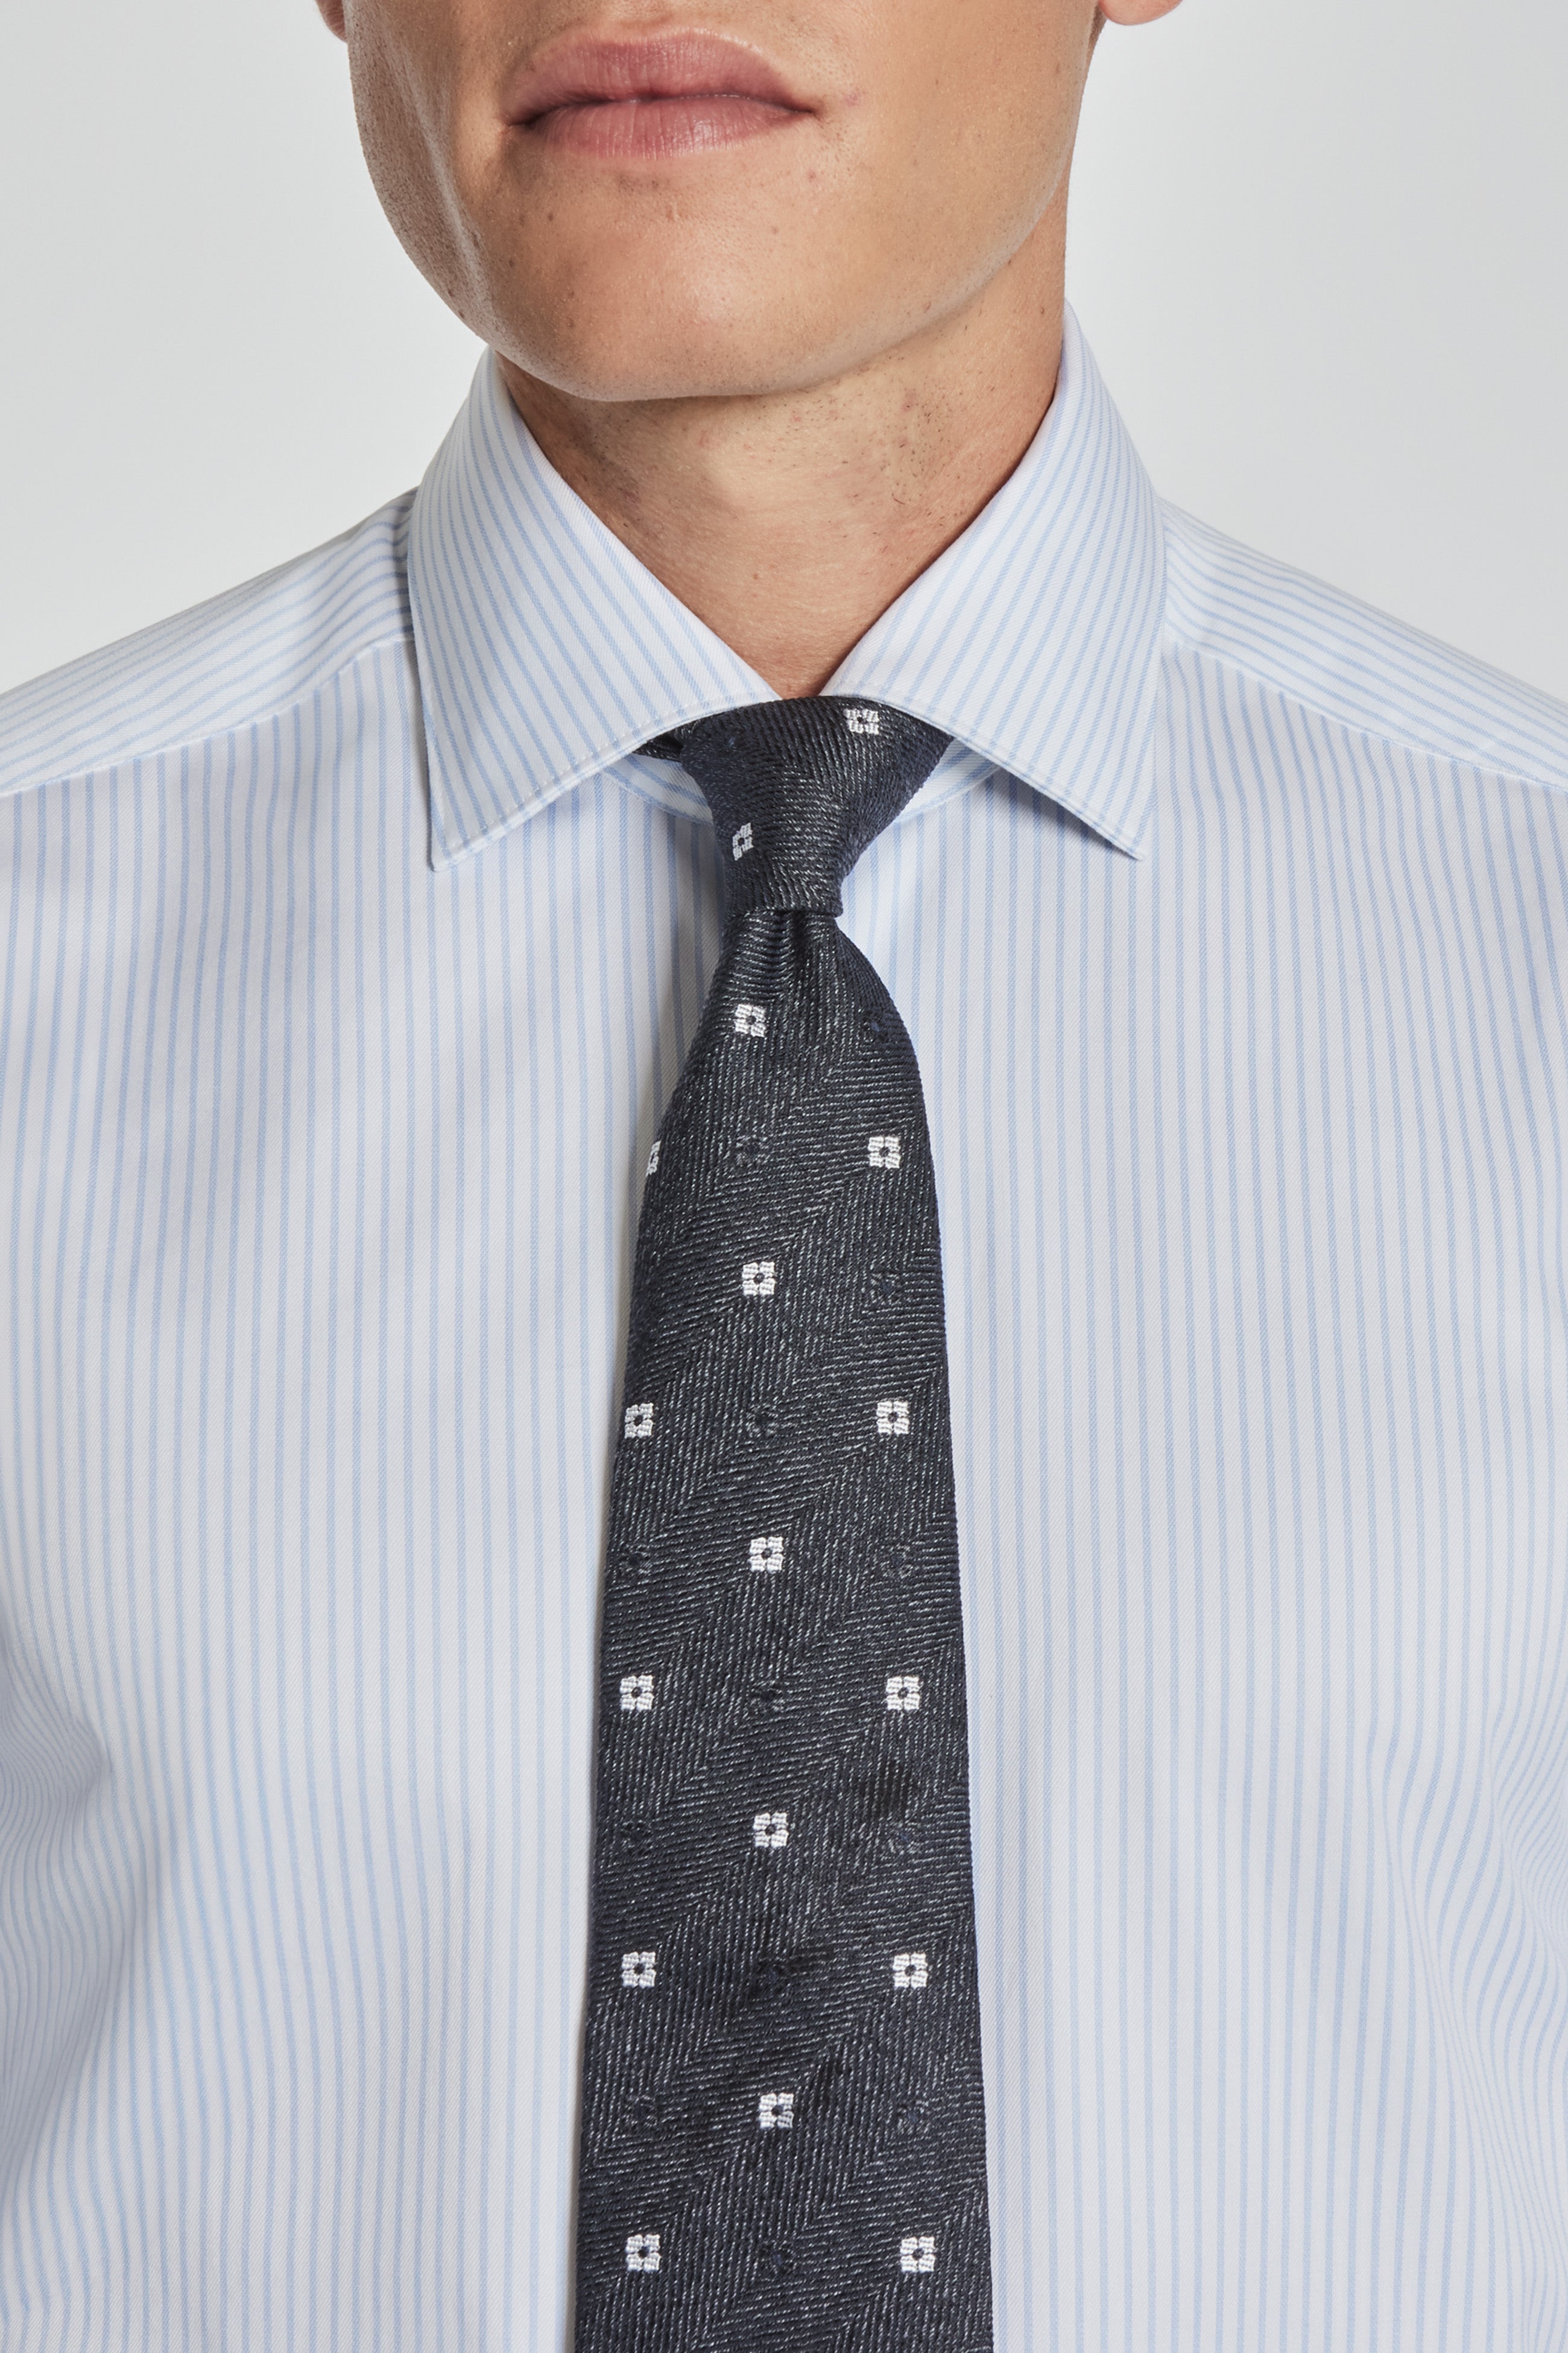 Vue alternative 2 Bethune cravate tissée en bleu marine